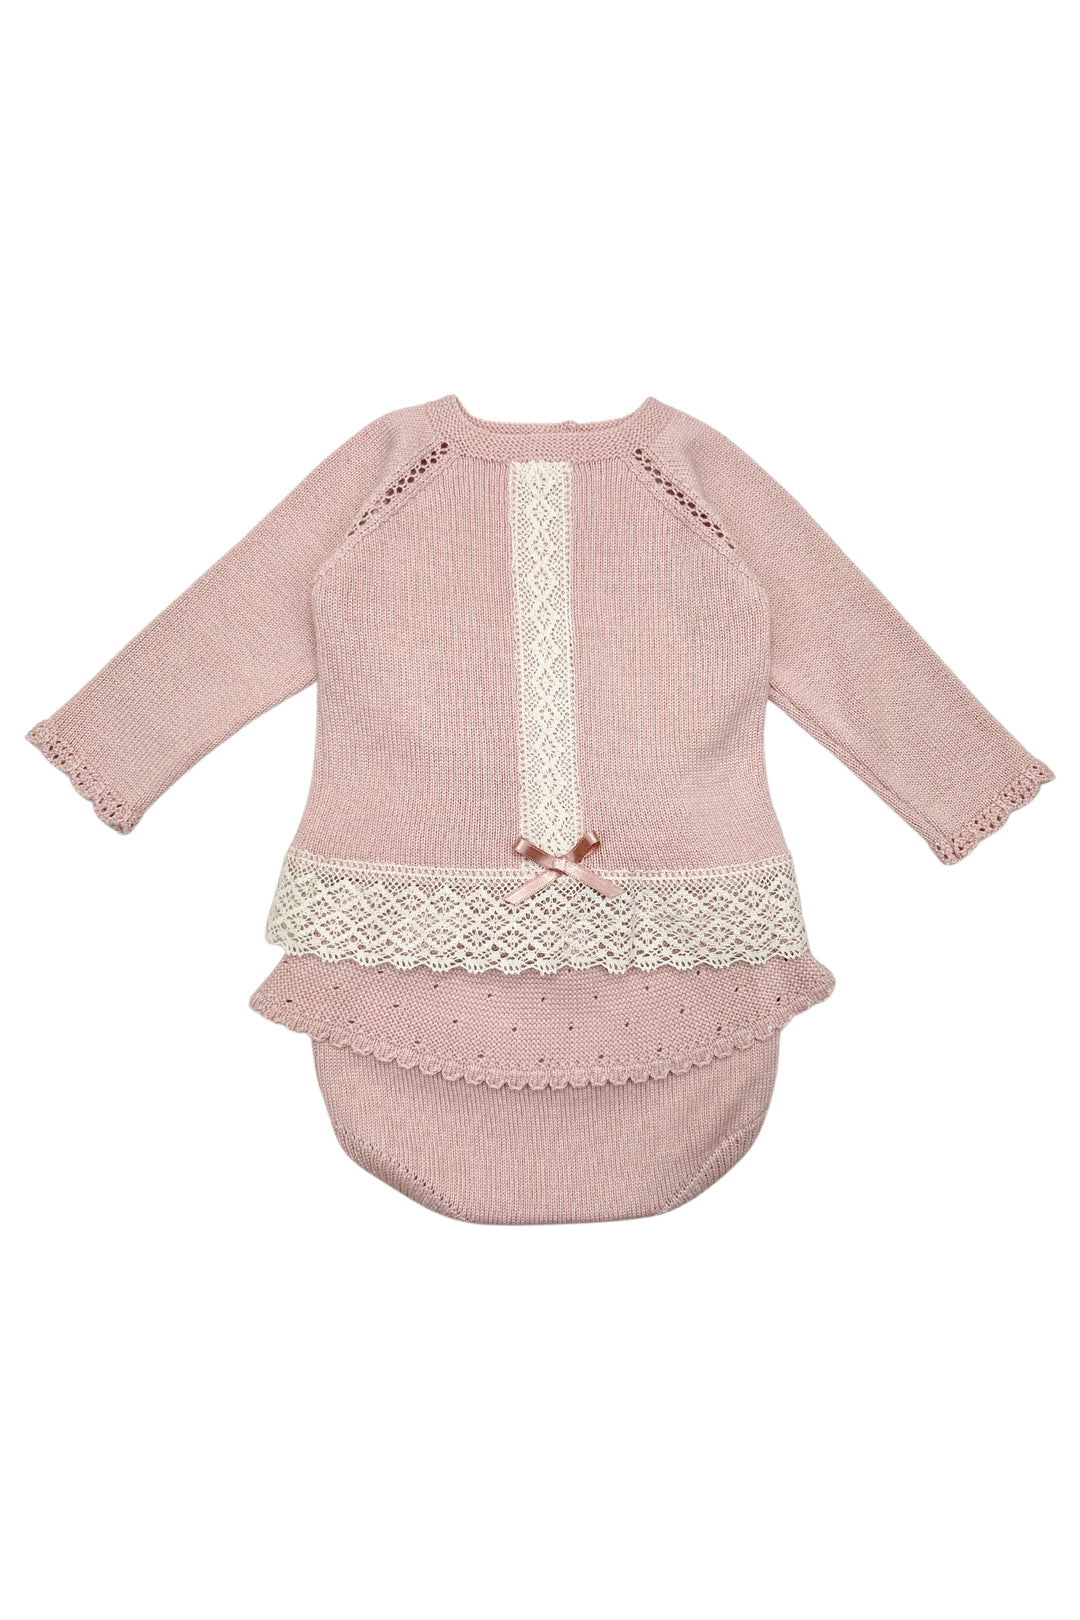 Granlei "Ethel" Dusky Pink Knit Top & Bloomers | Millie and John